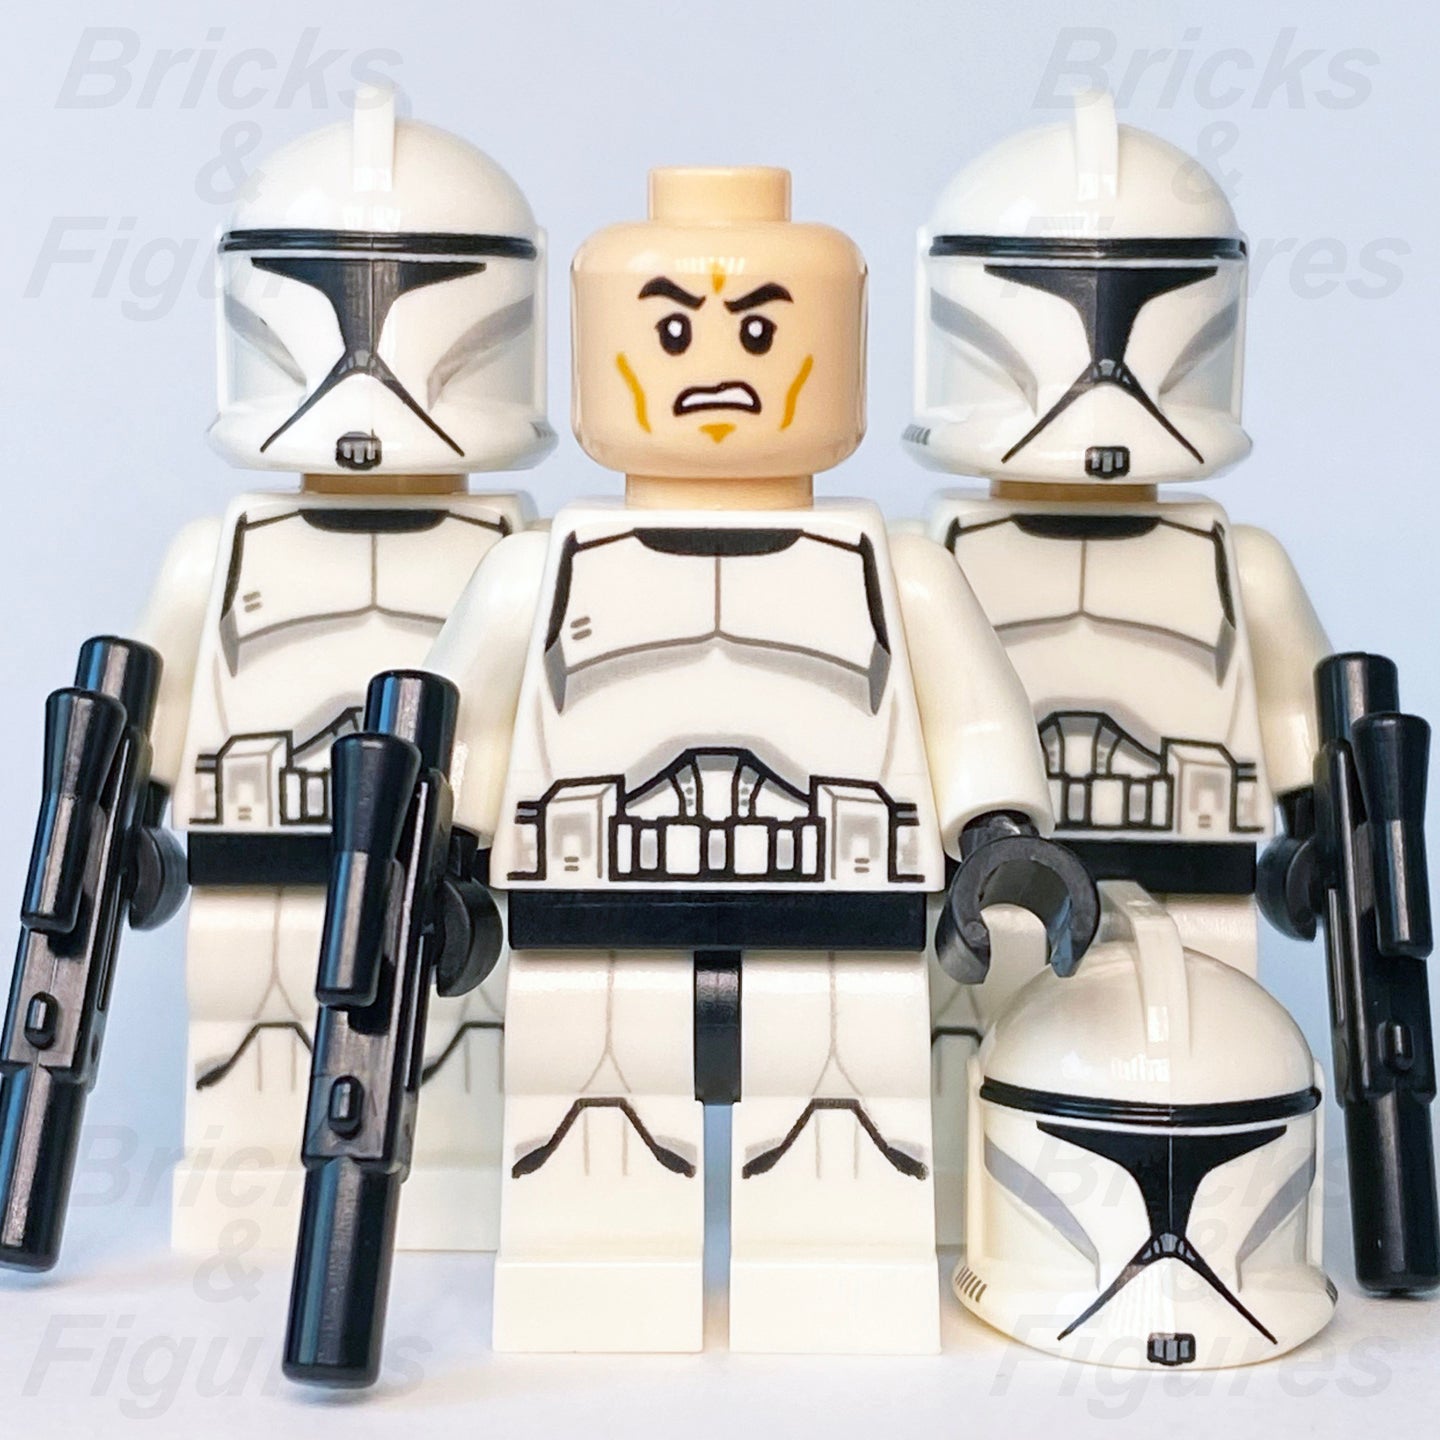 LEGO Star Wars Clone Trooper Minifigure - YOU CHOOSE